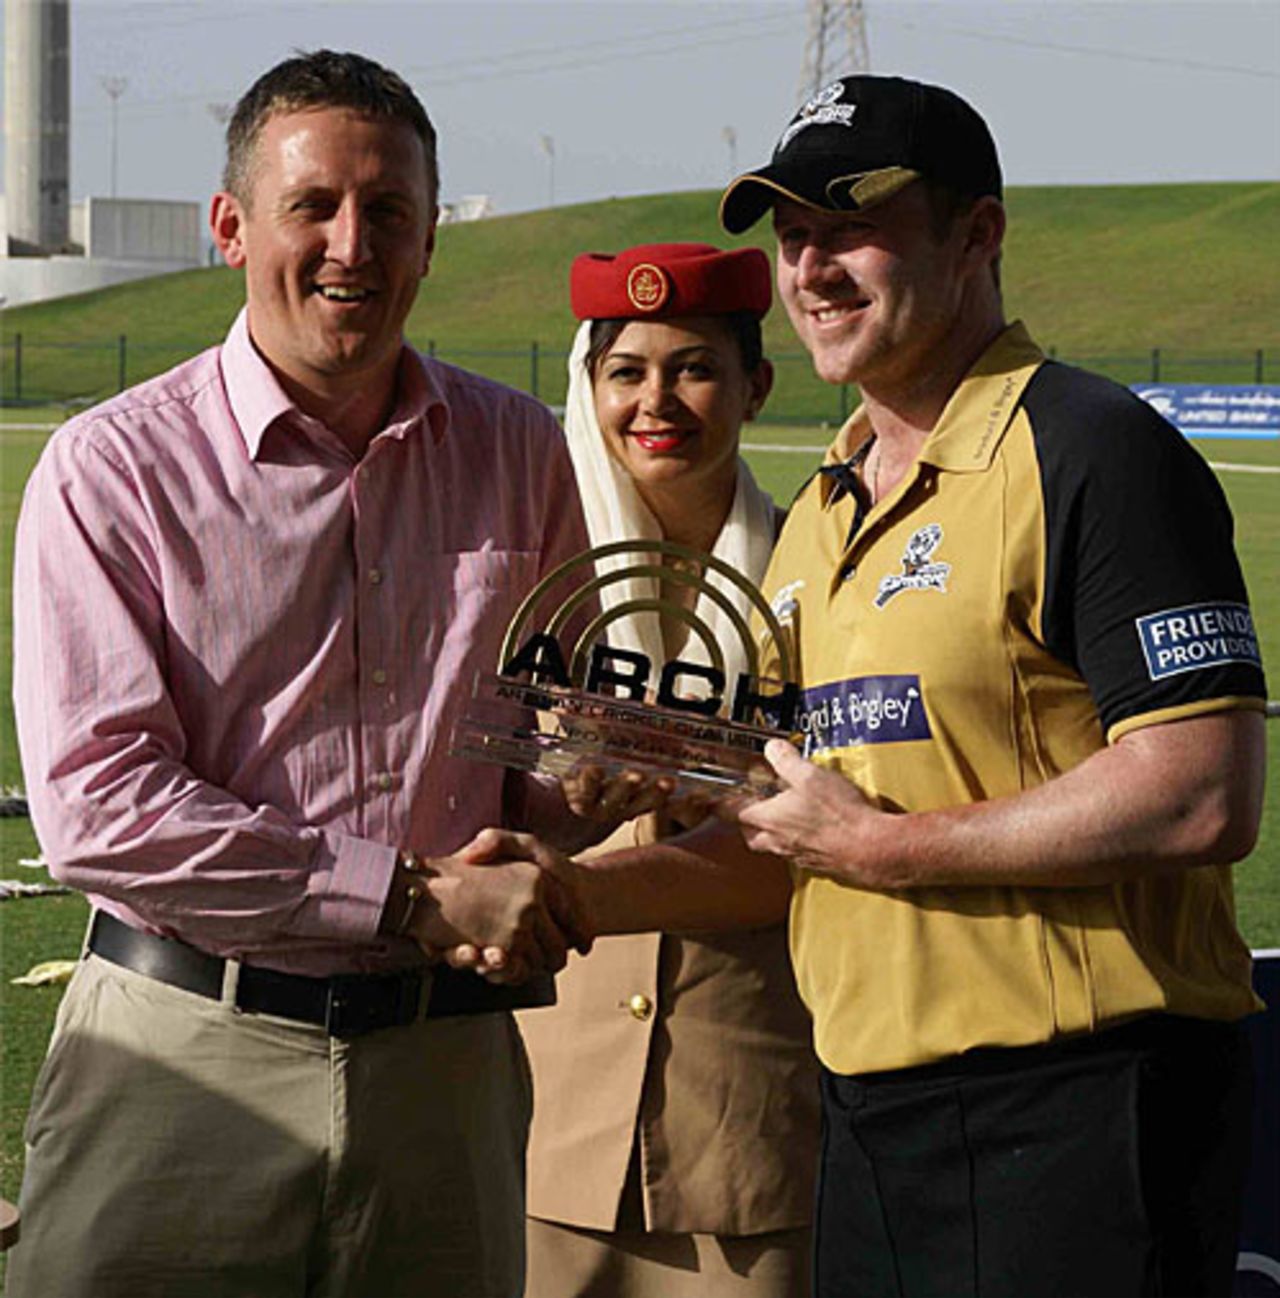 Anthony McGrath receives the Pro ARCH trophy, UAE v Yorkshire, Abu Dhabi, March 28, 2008